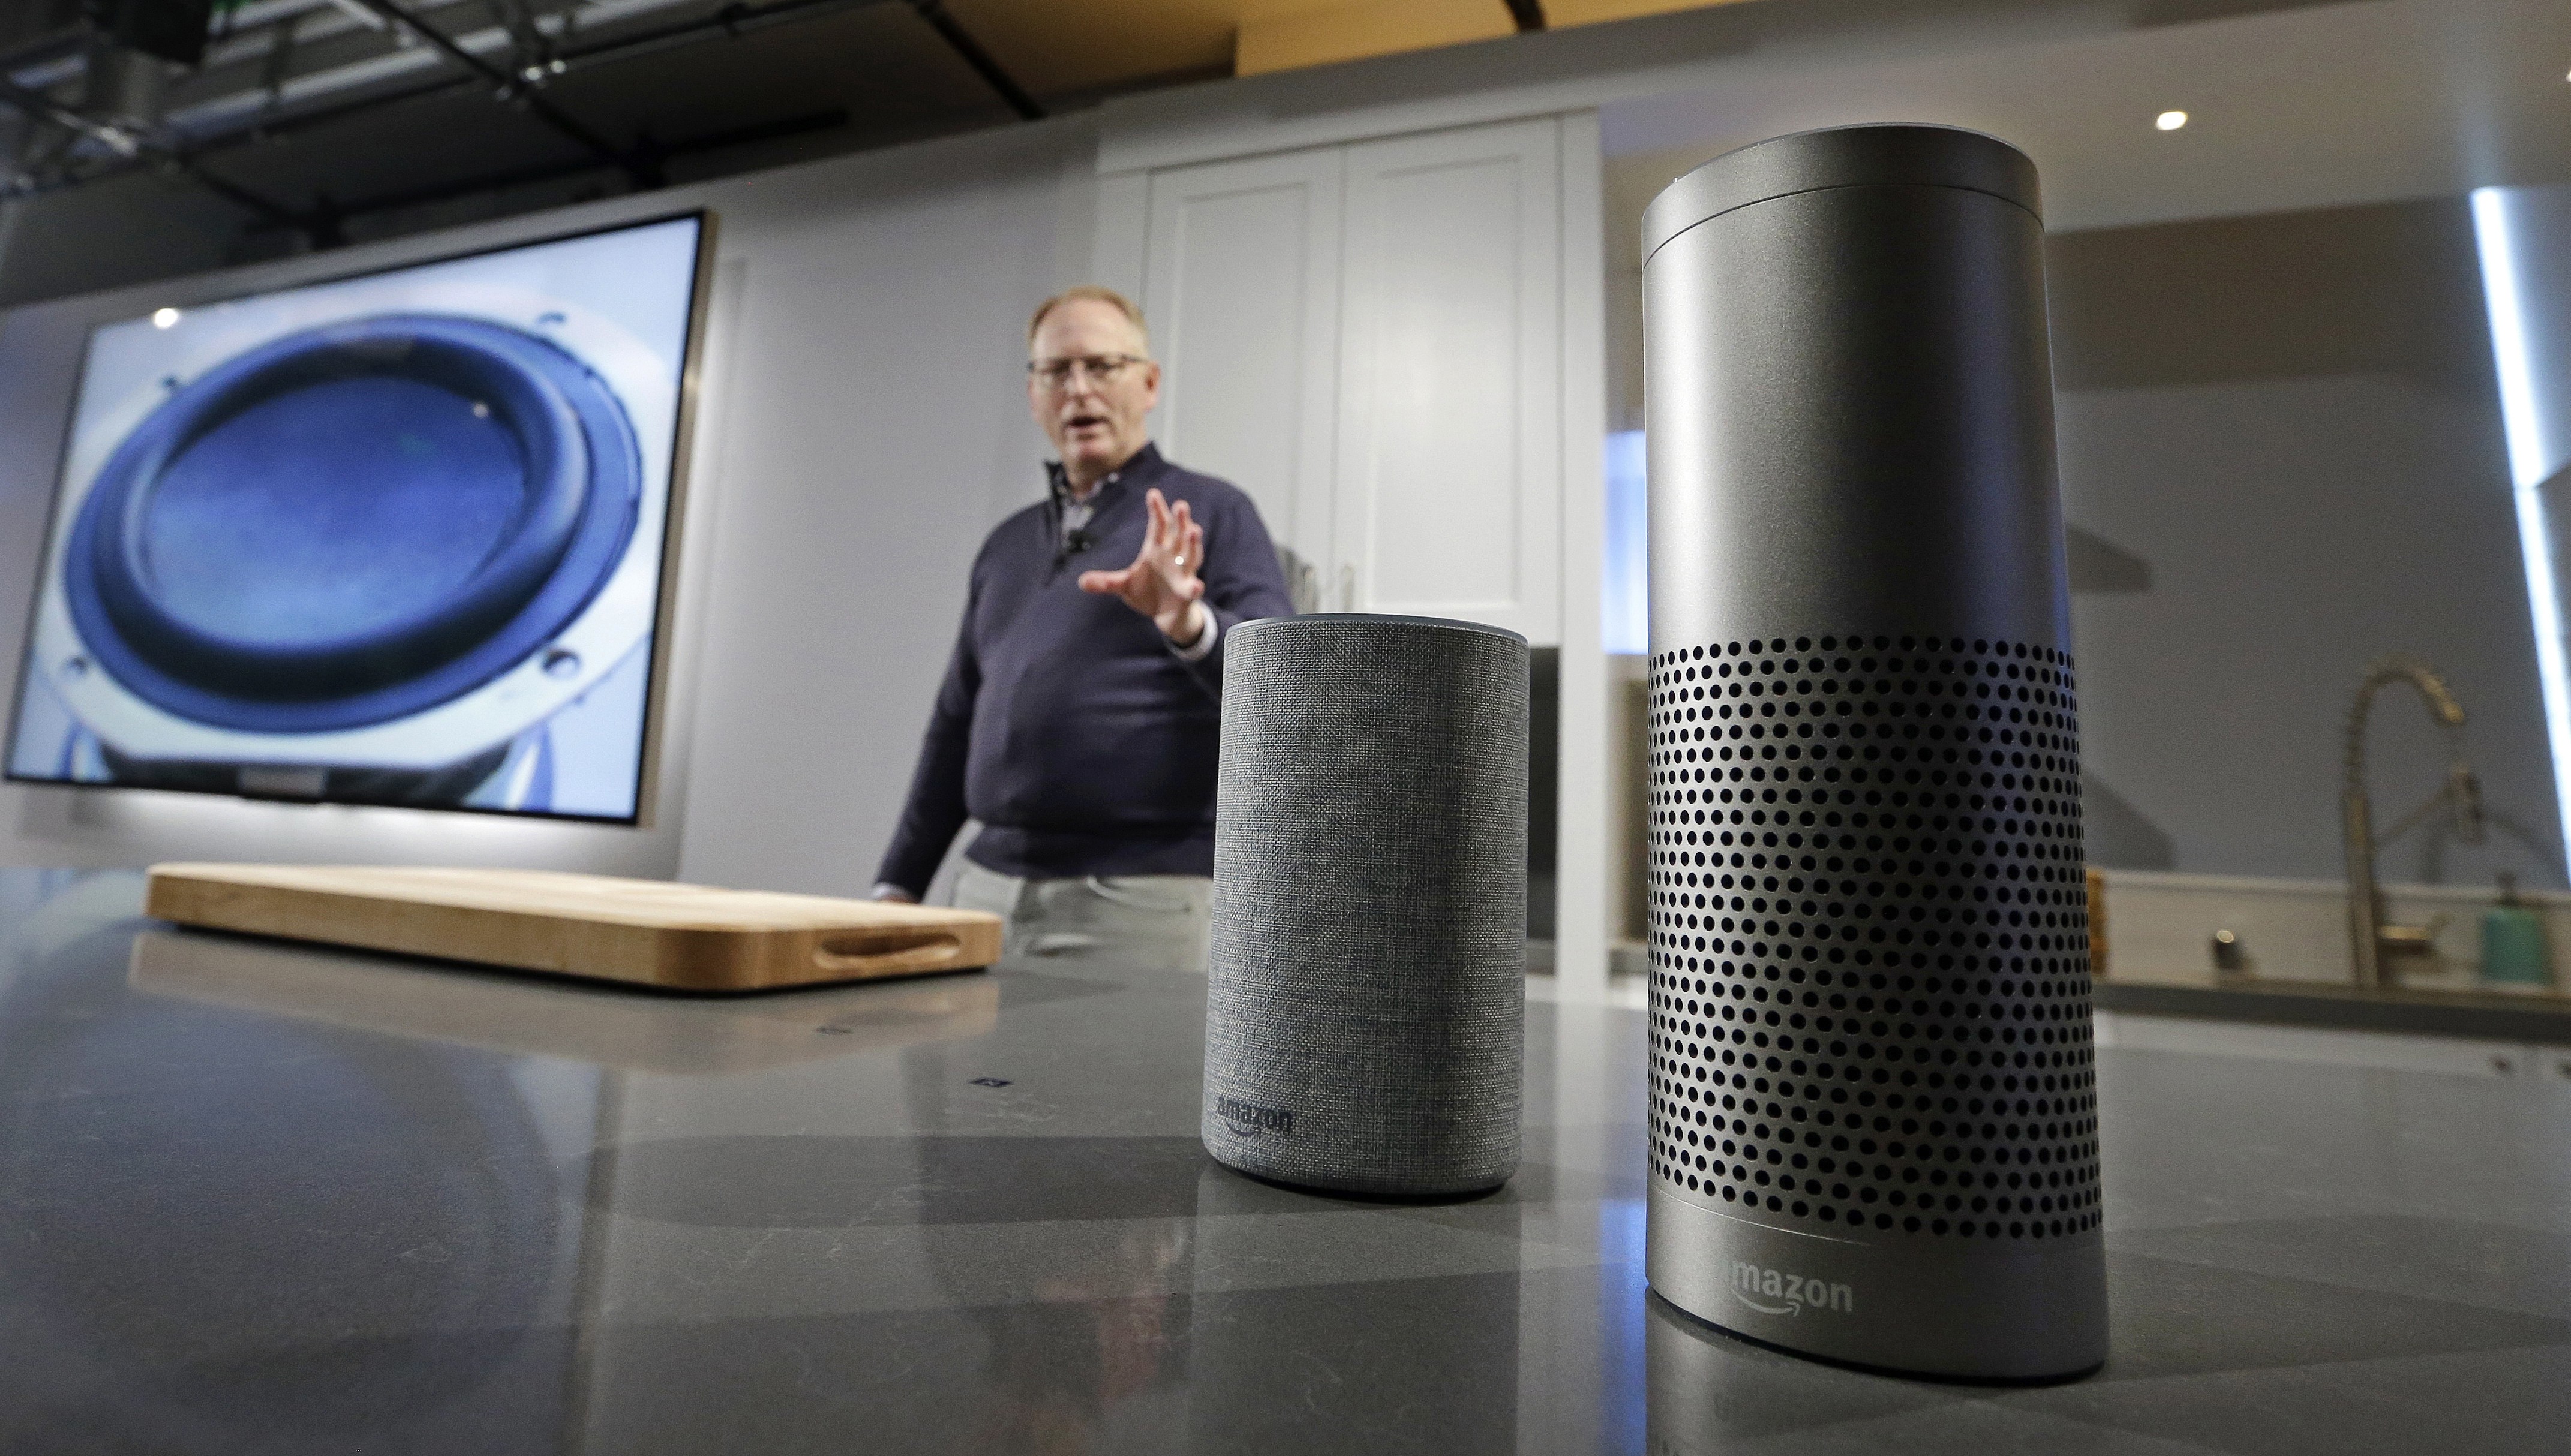 Amazon’s Echo smart speaker. Photo: AP